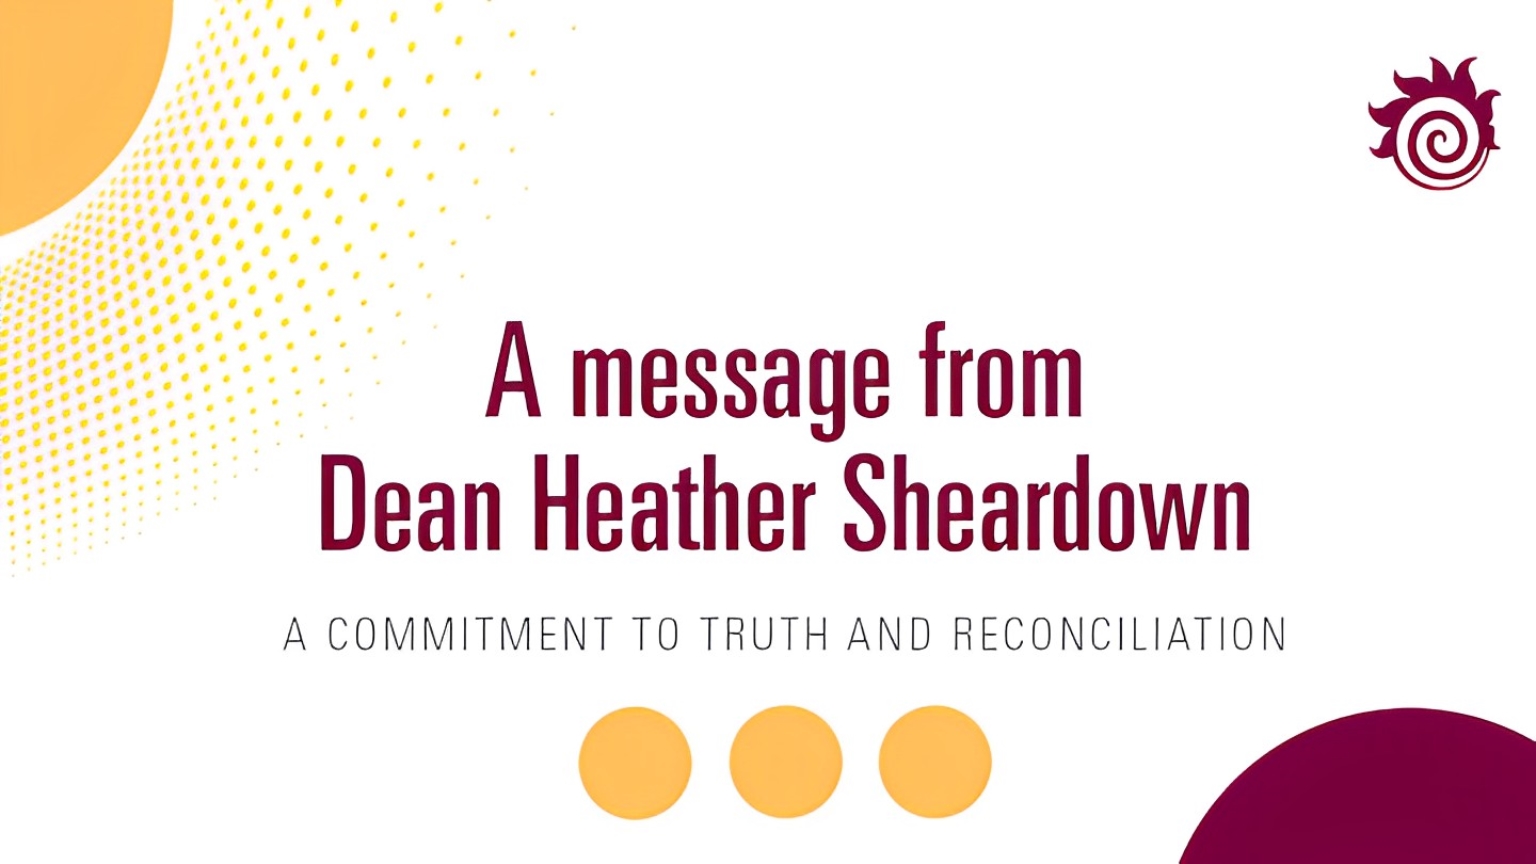 A message from Dean Heather Sheardown